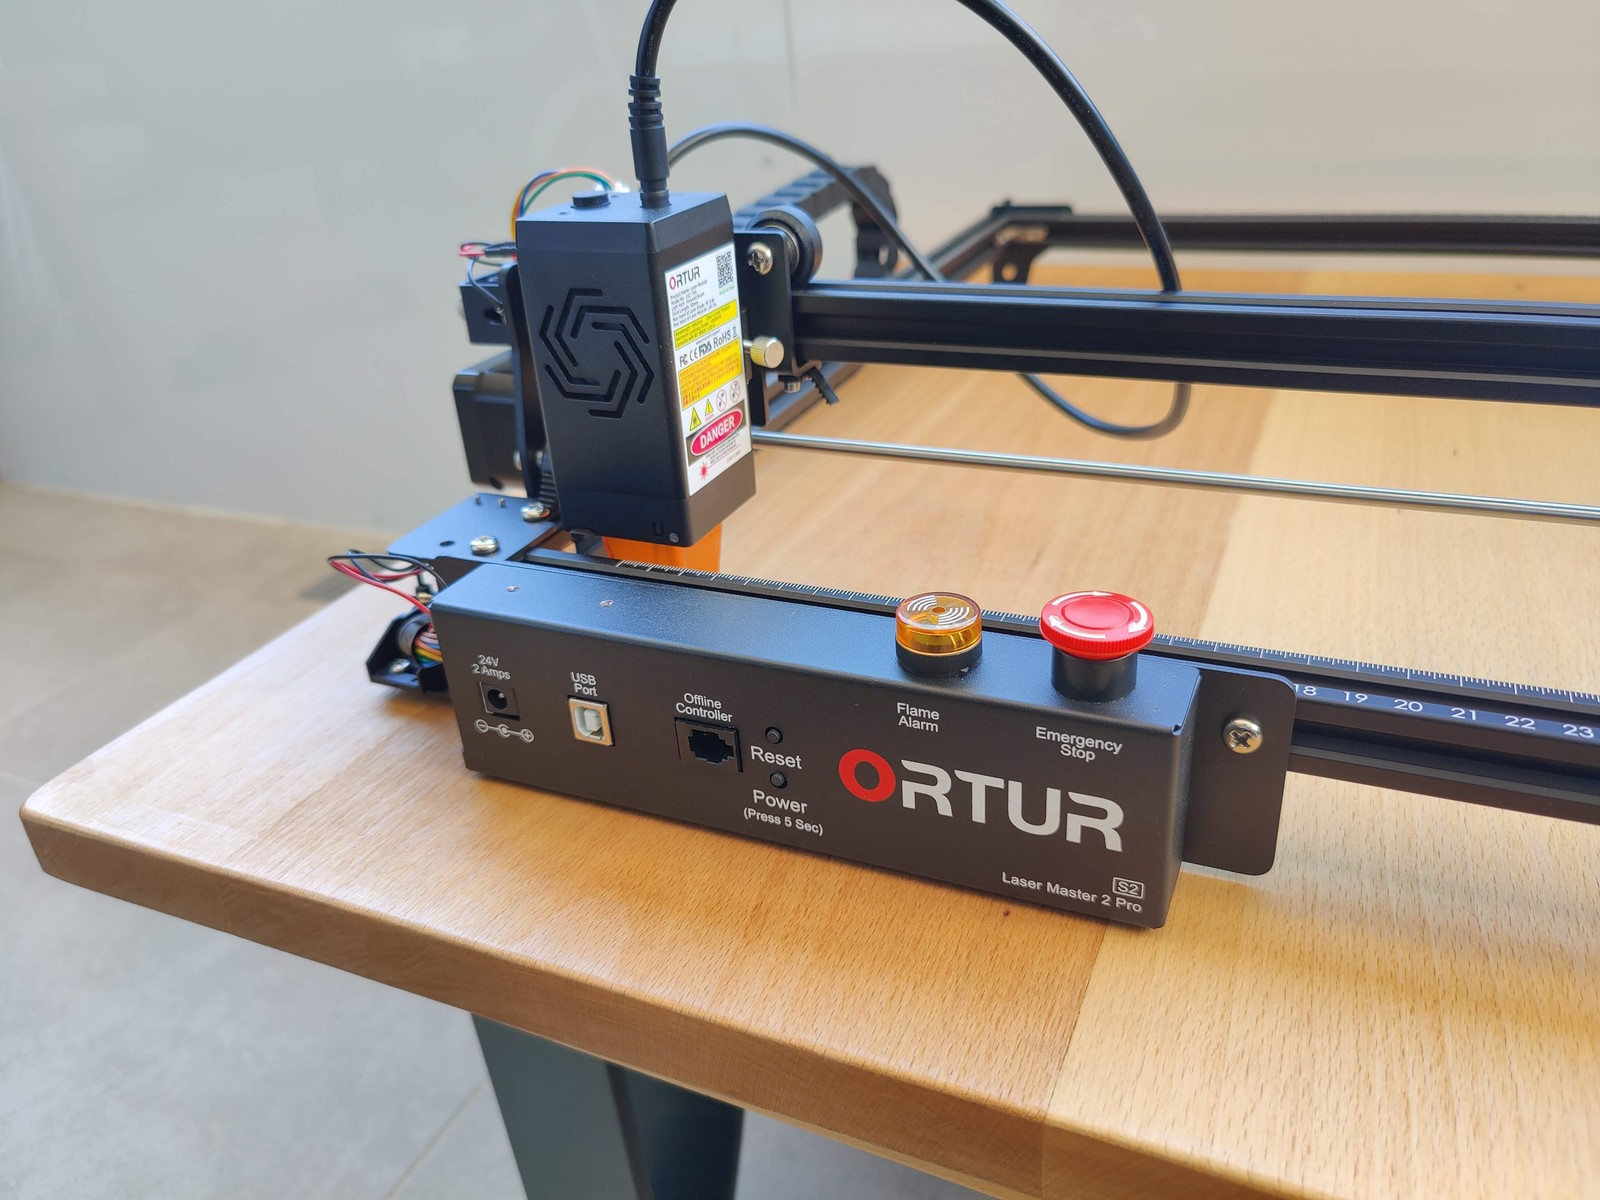 Ortur Laser Master 2 Pro S2 review